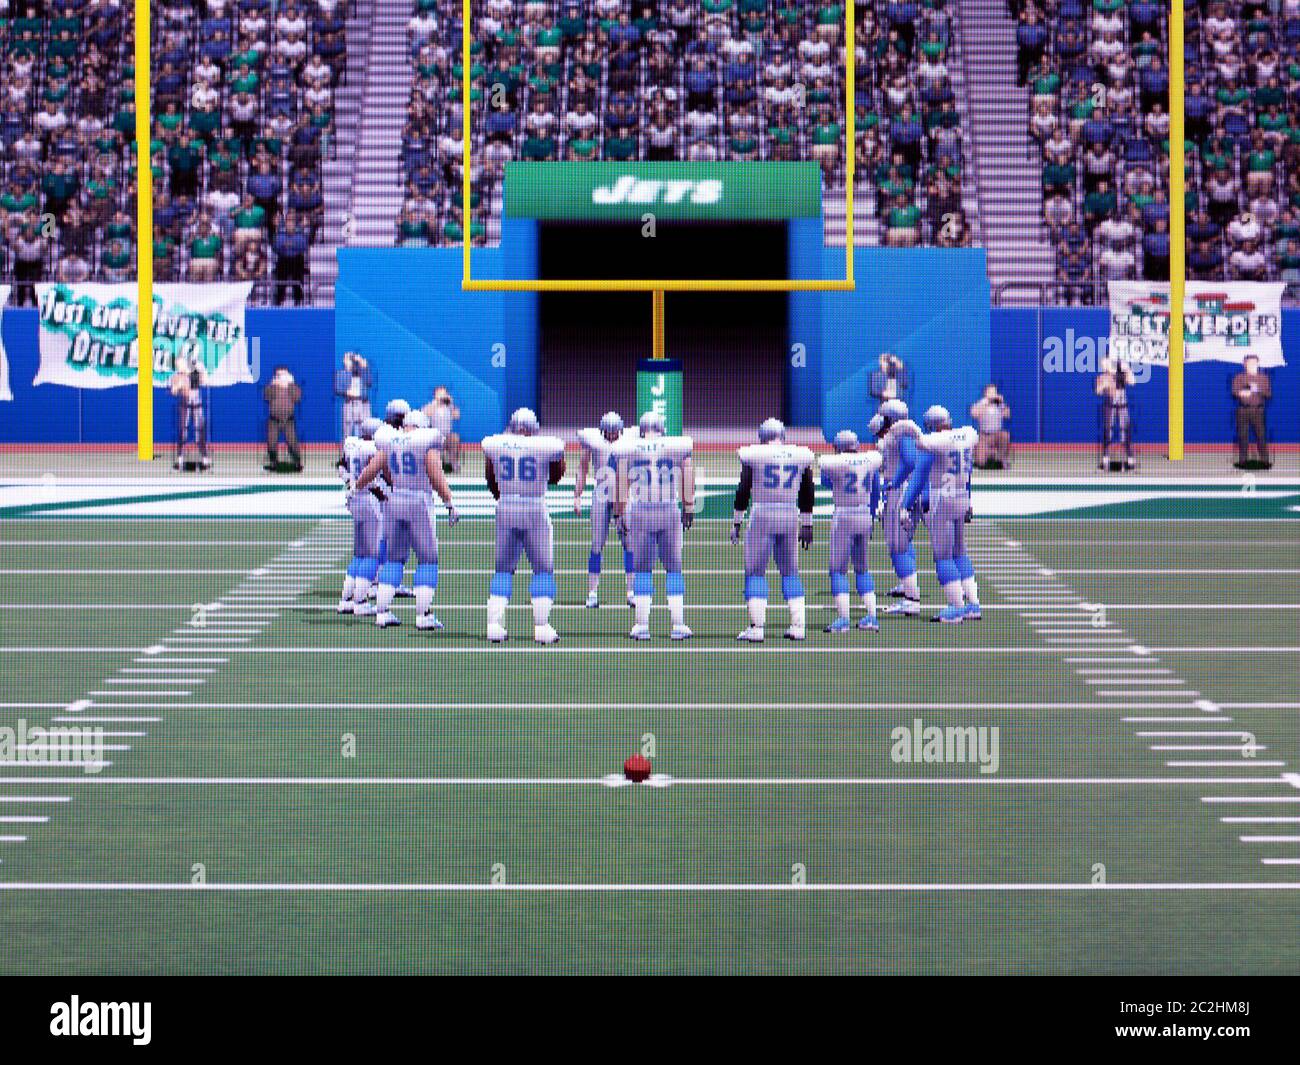 NFL 2K1 - Sega Dreamcast Videogame - Editorial use only Stock Photo